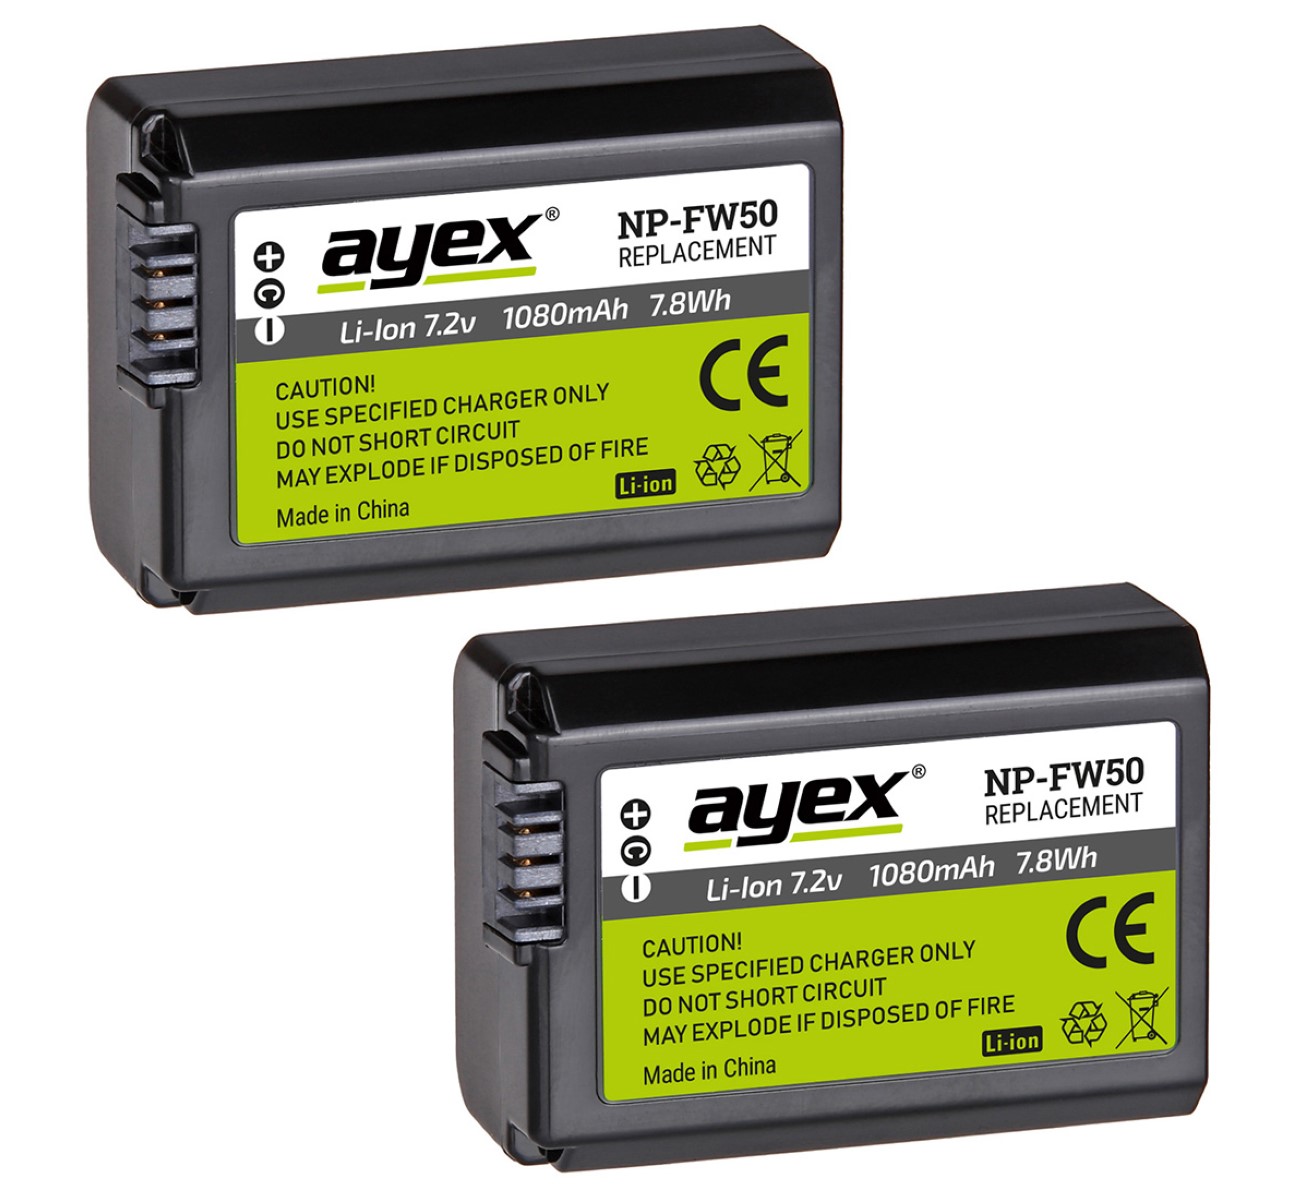 Meike Batteriegriff Set für Sony Alpha a7 a7R a7S wie VG-C1EM + 2x ayex NP-FW50 Akku + USB Dual Ladegerät MK-A7